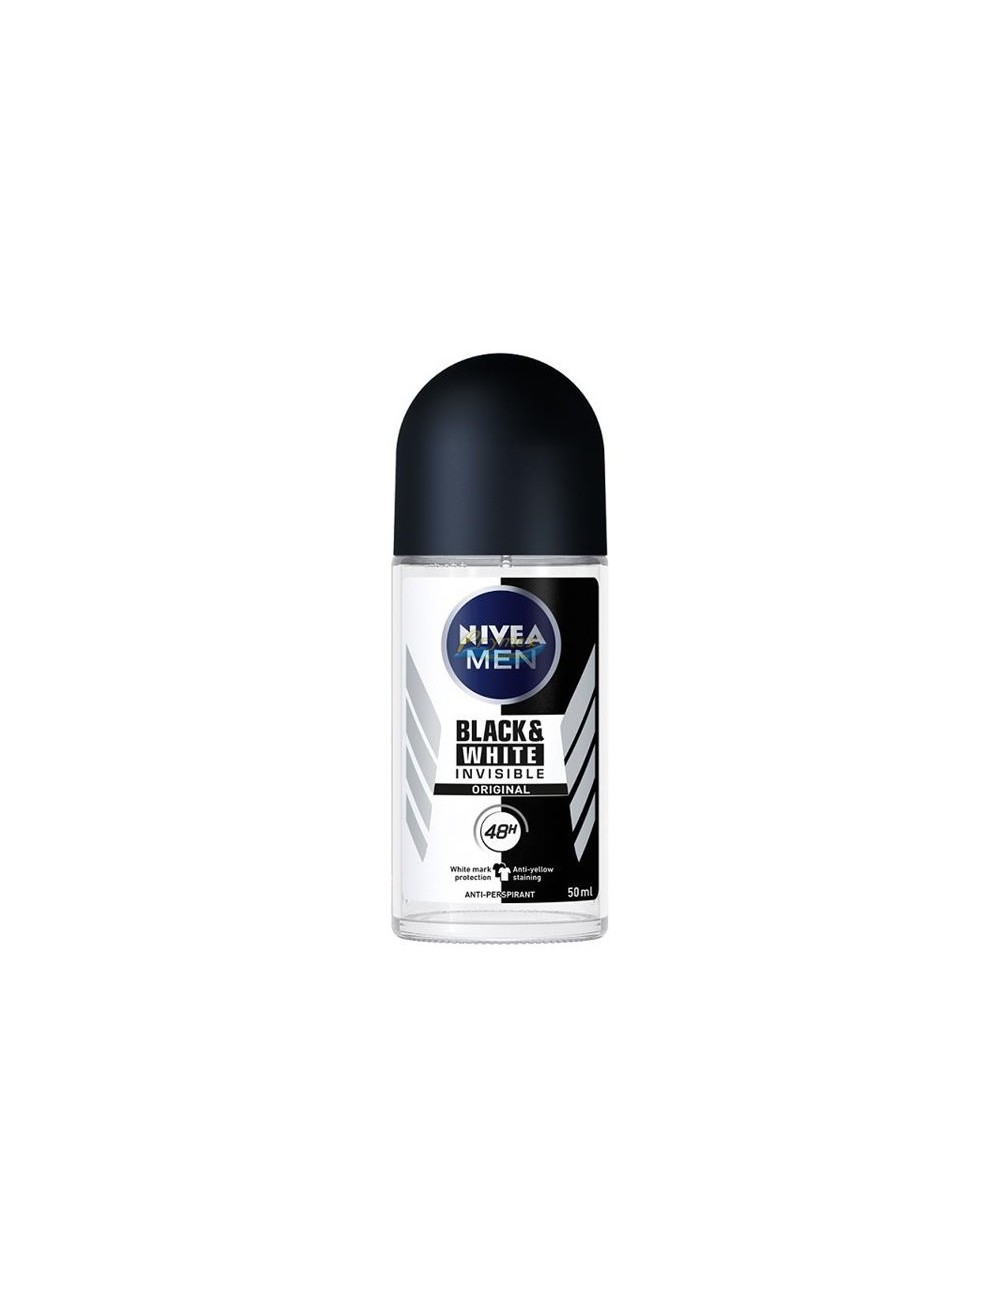 Nivea Men Antyperspirant w Kulce Black & White Invisible Original 48h 50 ml